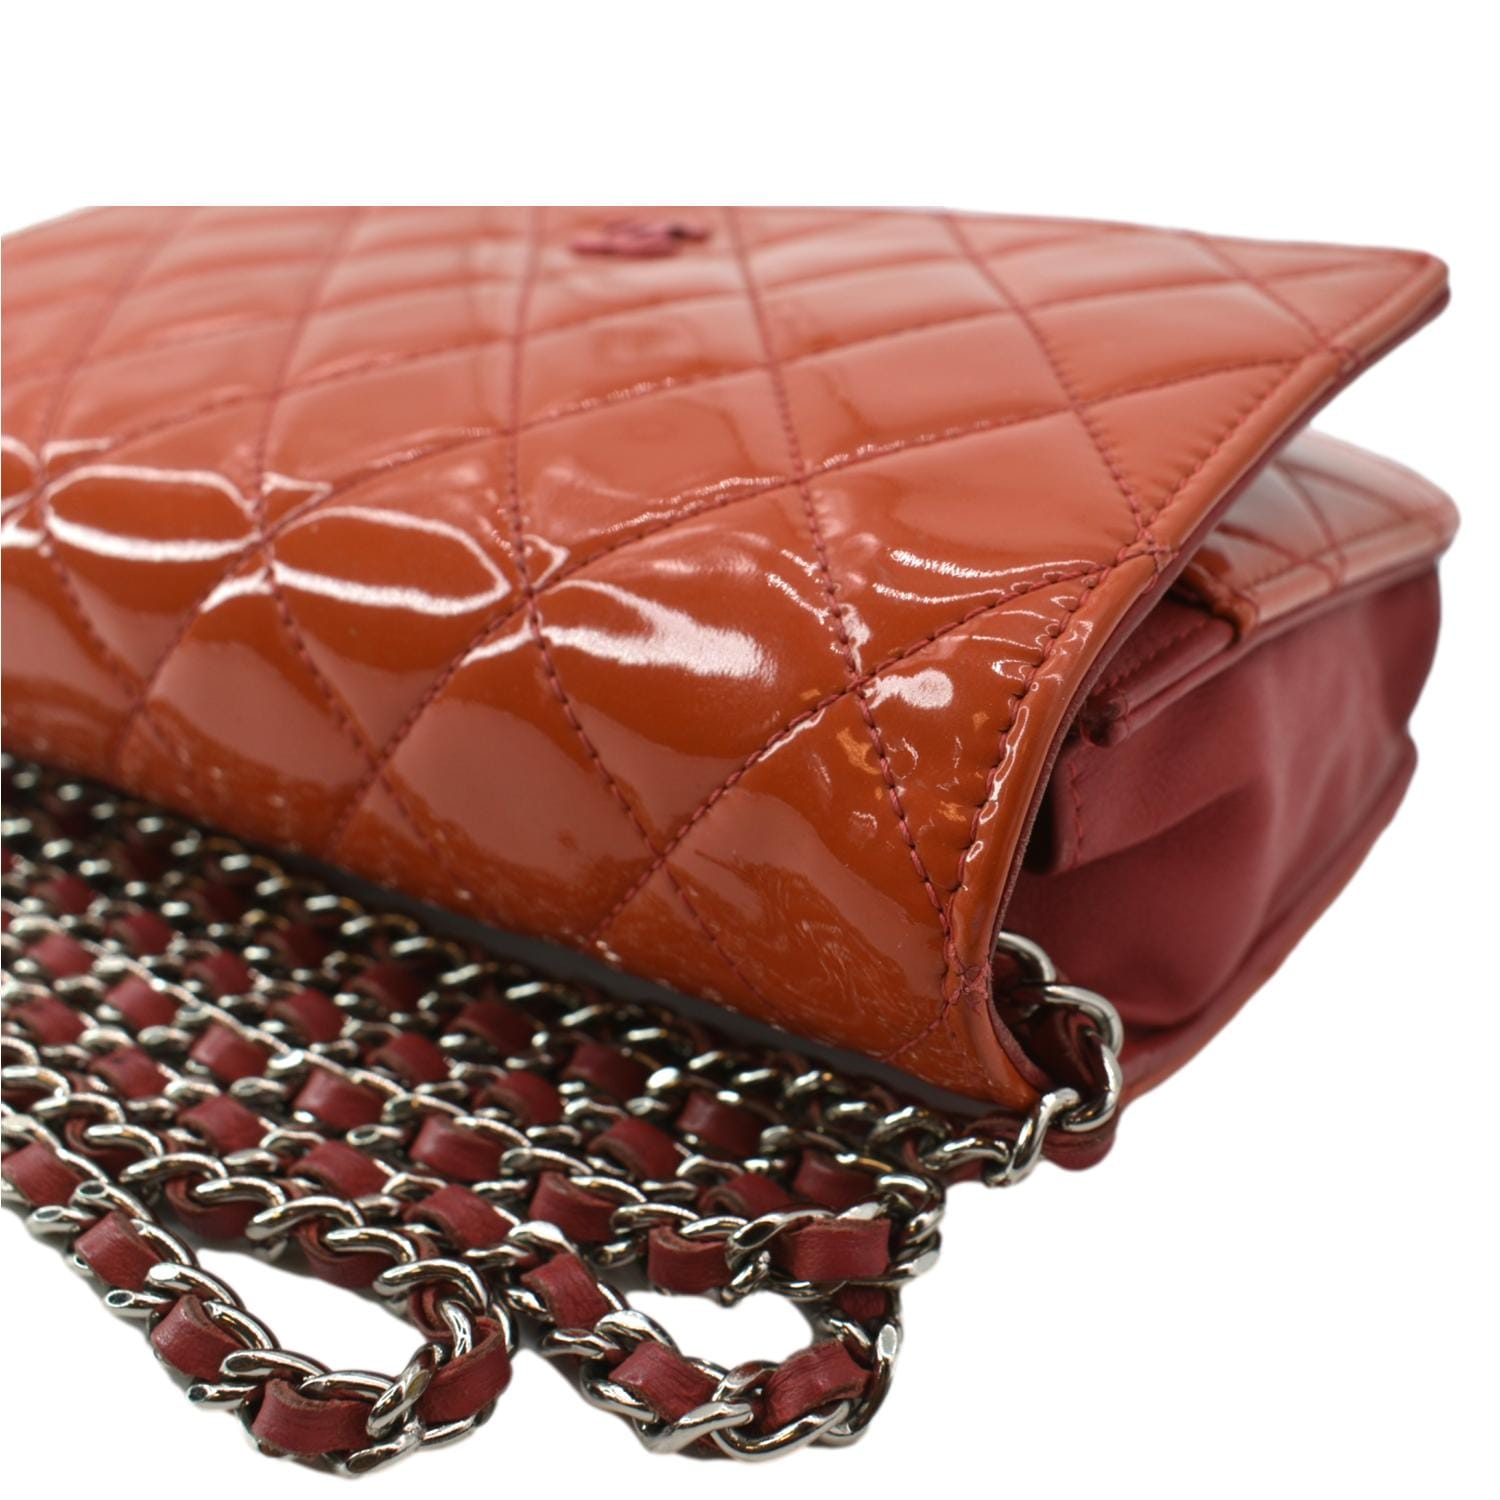 chanel belt purse leather